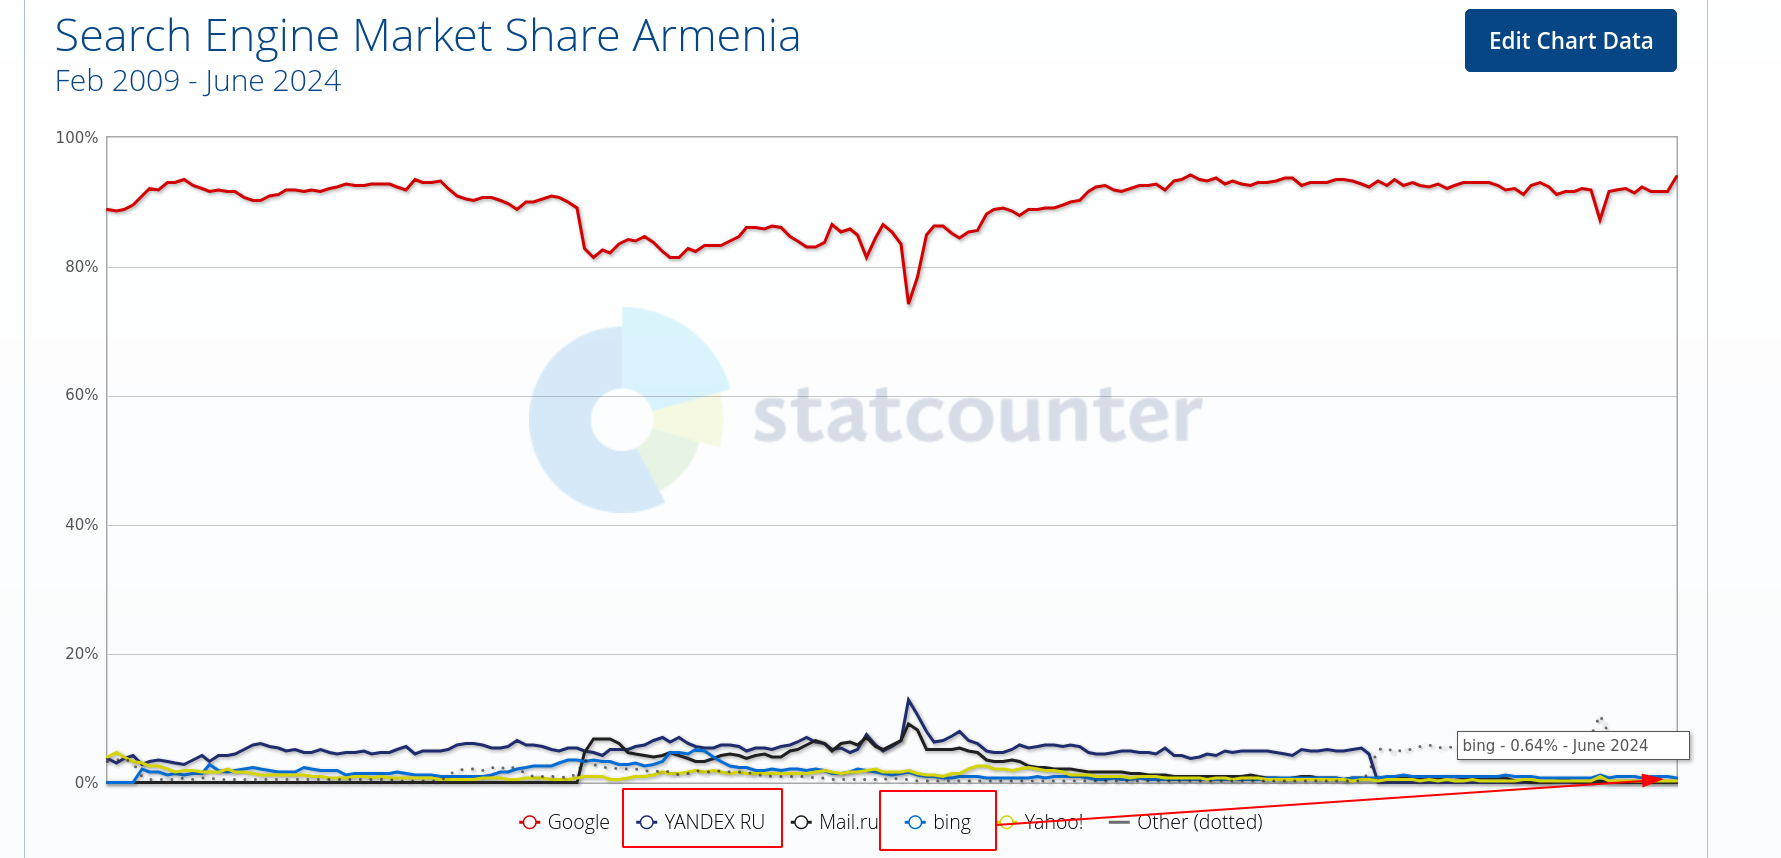 Search Engine Market Share Armenia: Feb 2009 - June 2024